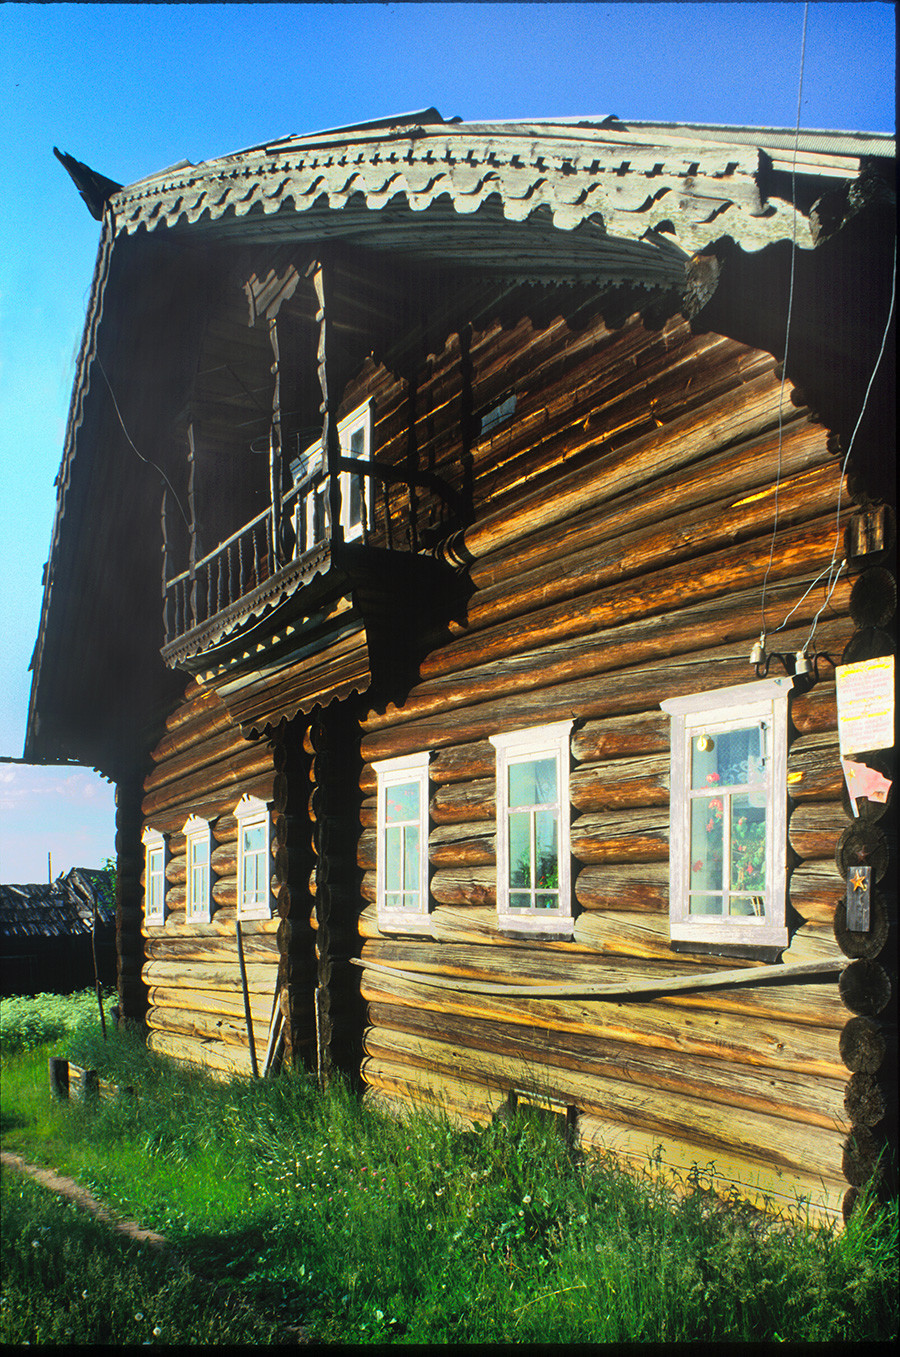 Krivtsovskaya. Log house with bowed roof & decorative end boards. June 25, 2000